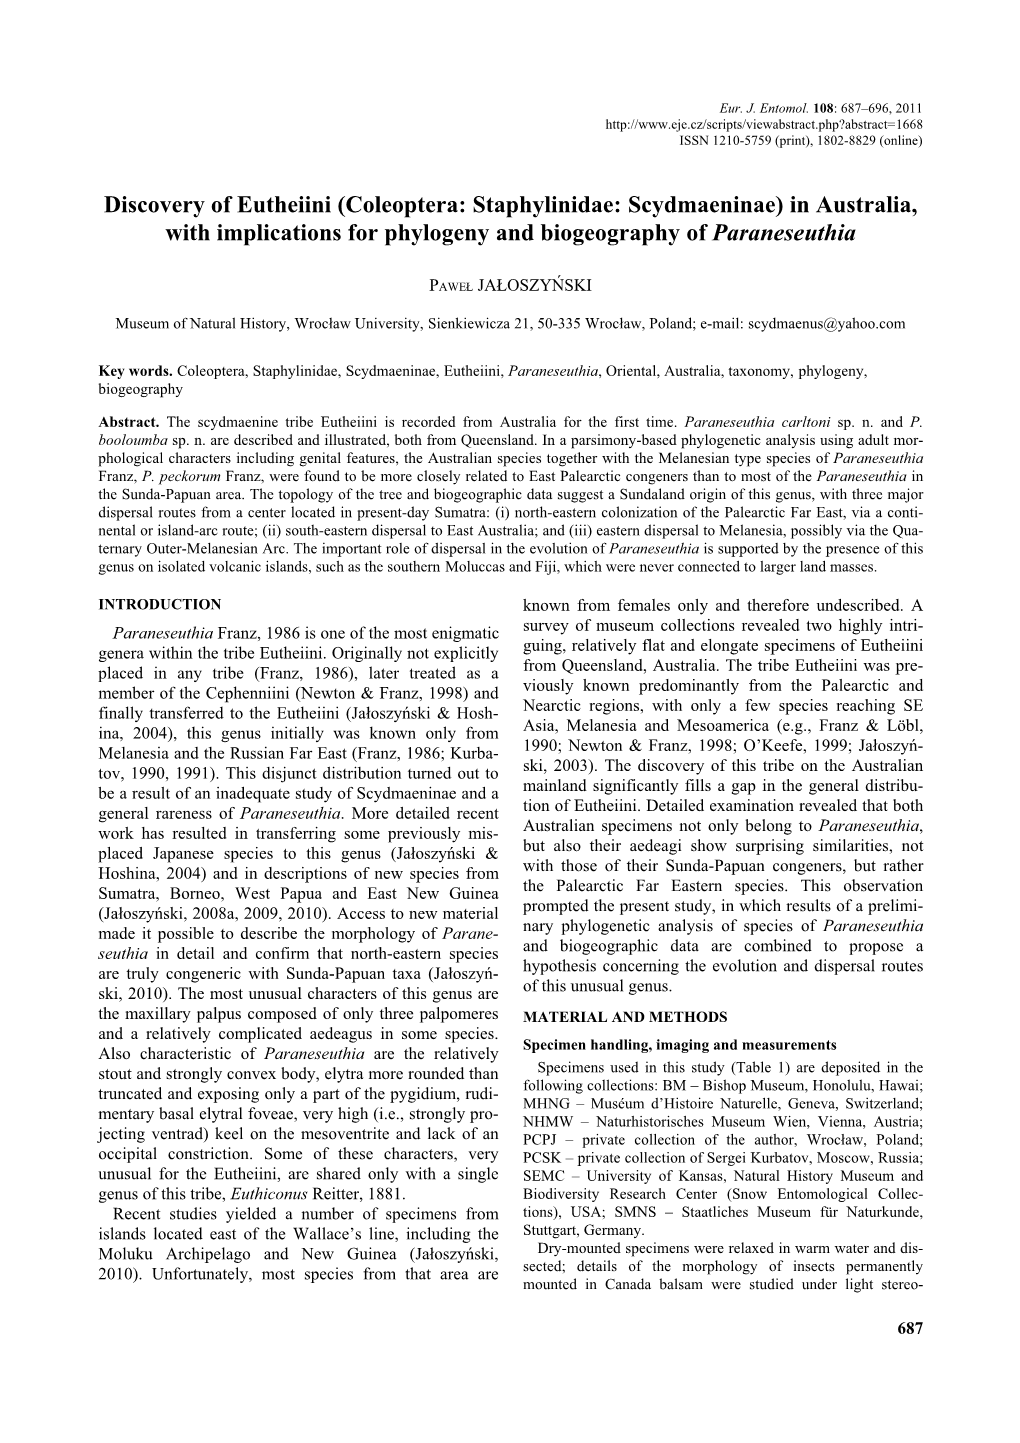 Discovery of Eutheiini (Coleoptera: Staphylinidae: Scydmaeninae) in Australia, with Implications for Phylogeny and Biogeography of Paraneseuthia